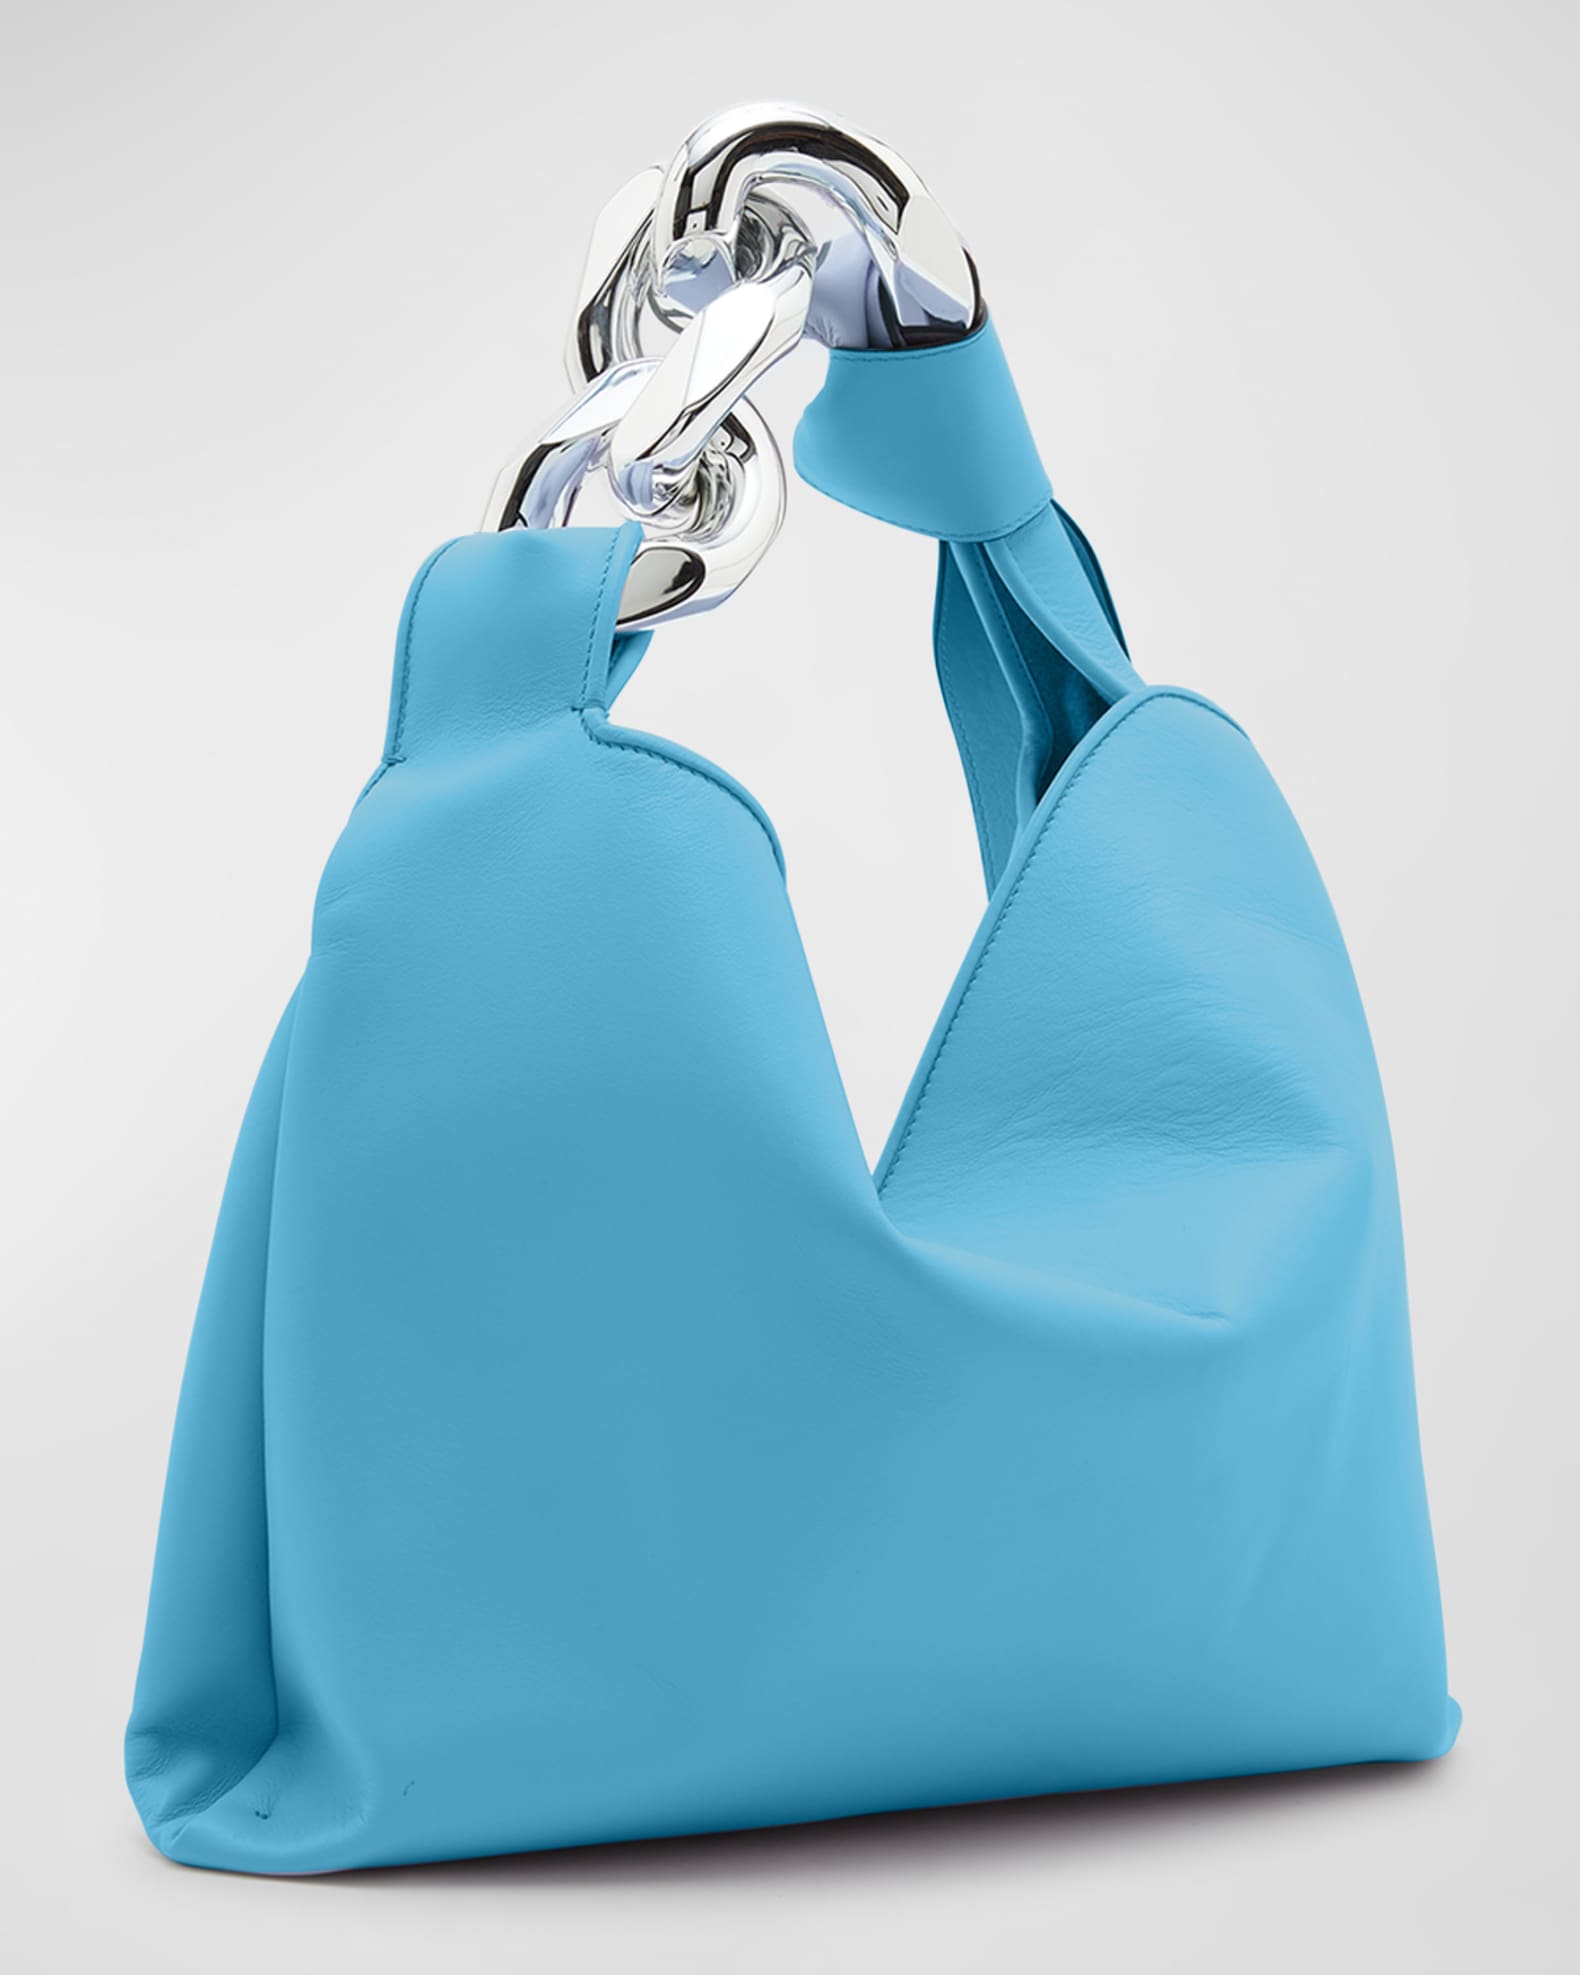 JW Anderson Small Chain Leather Hobo Bag, Turquoise, Women's, Handbags & Purses Hobo Bags